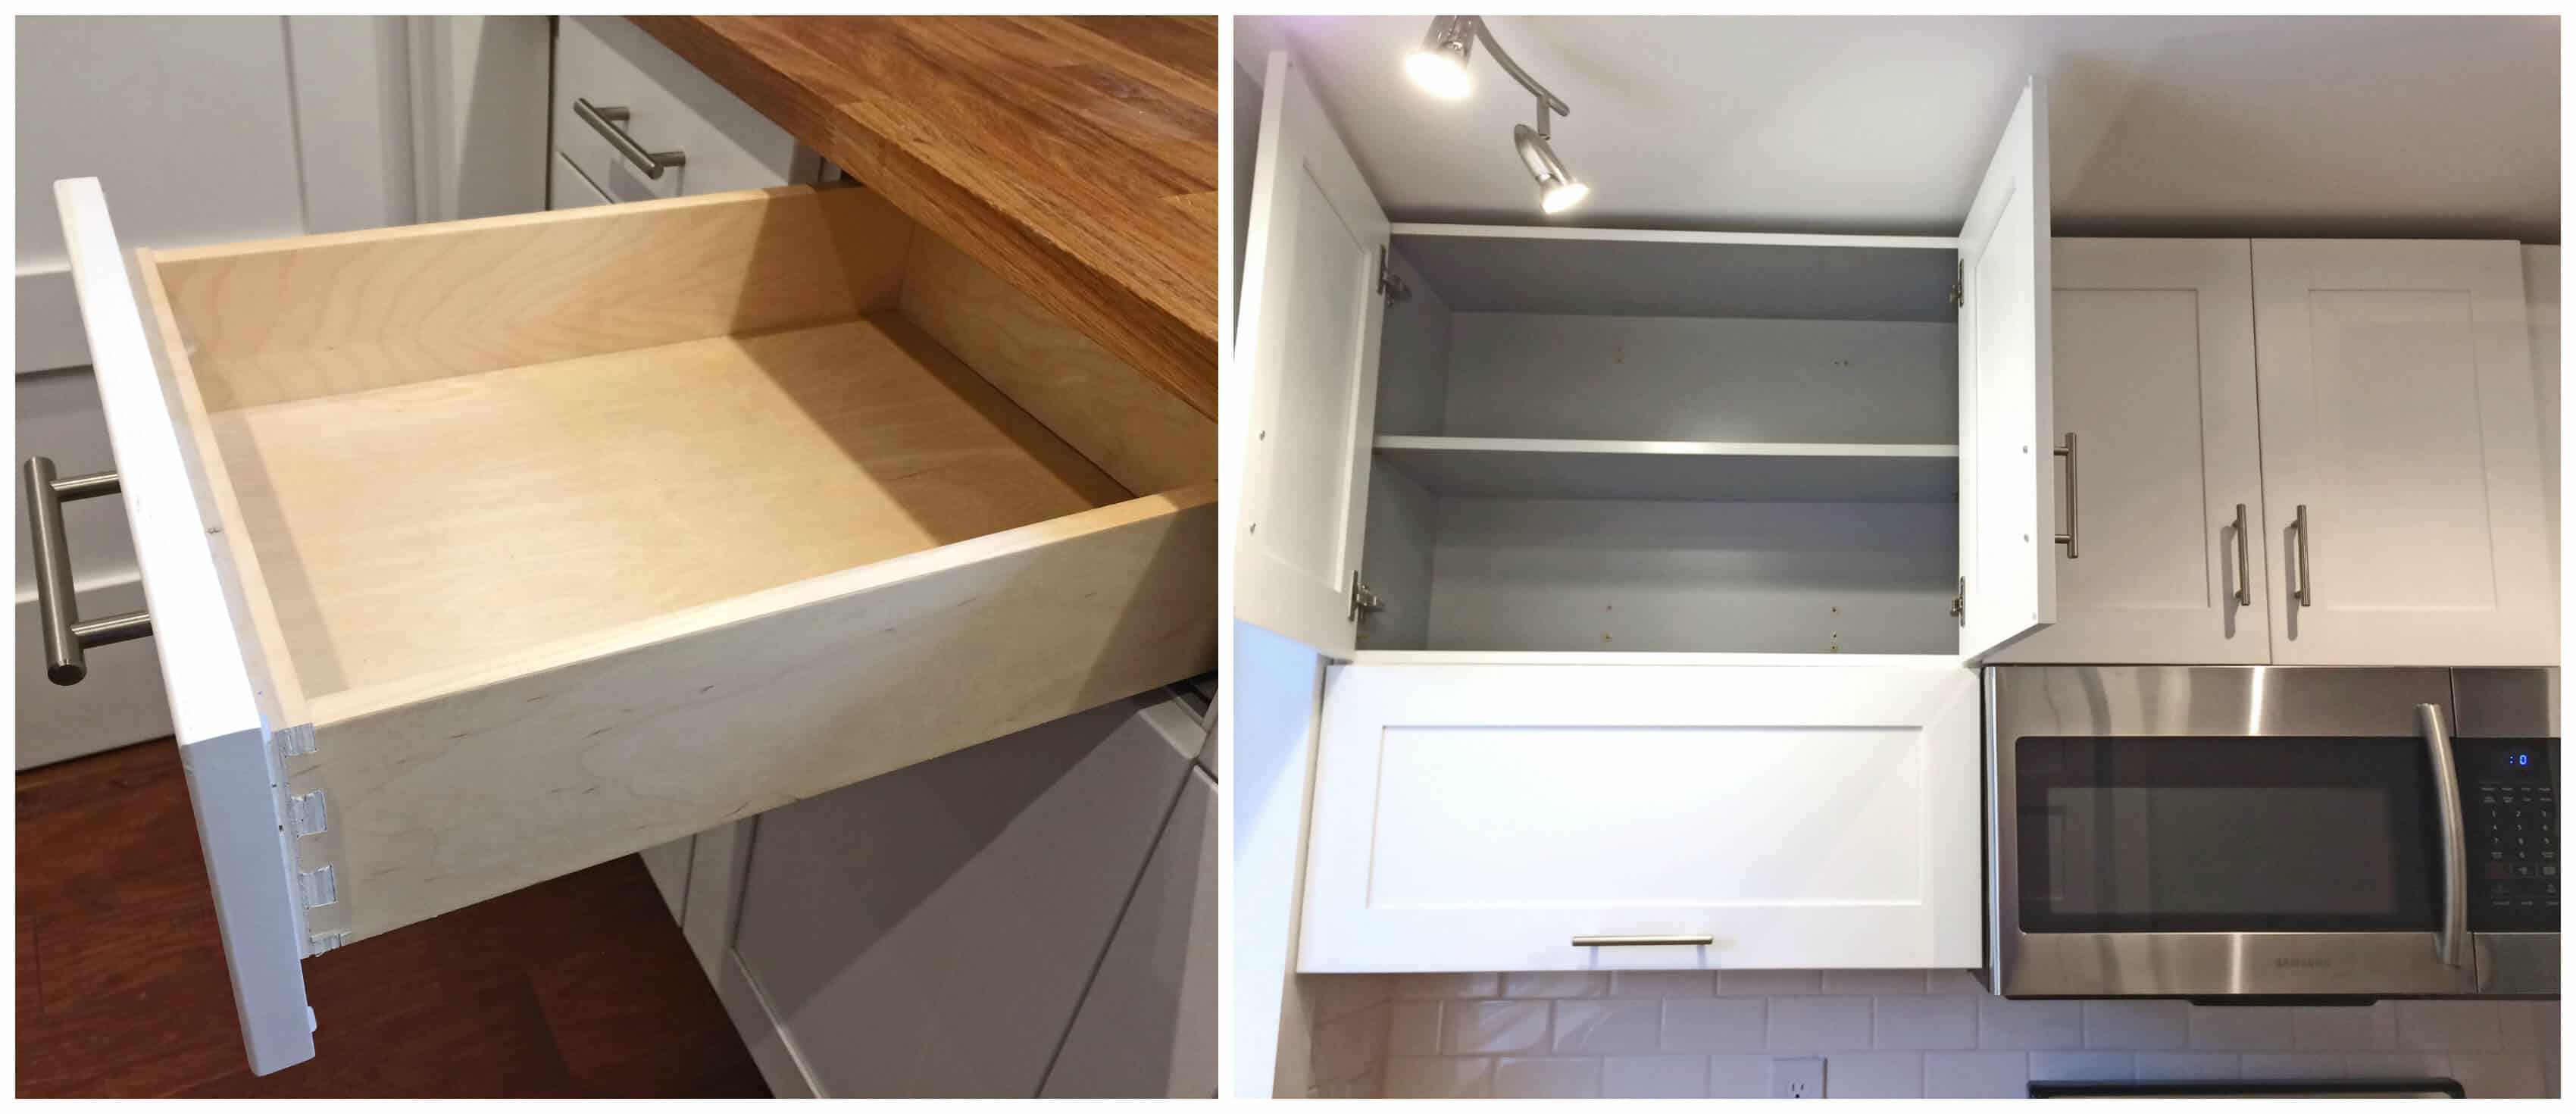 bellmont kitchen cabinets review remodel renovation diy atg stores